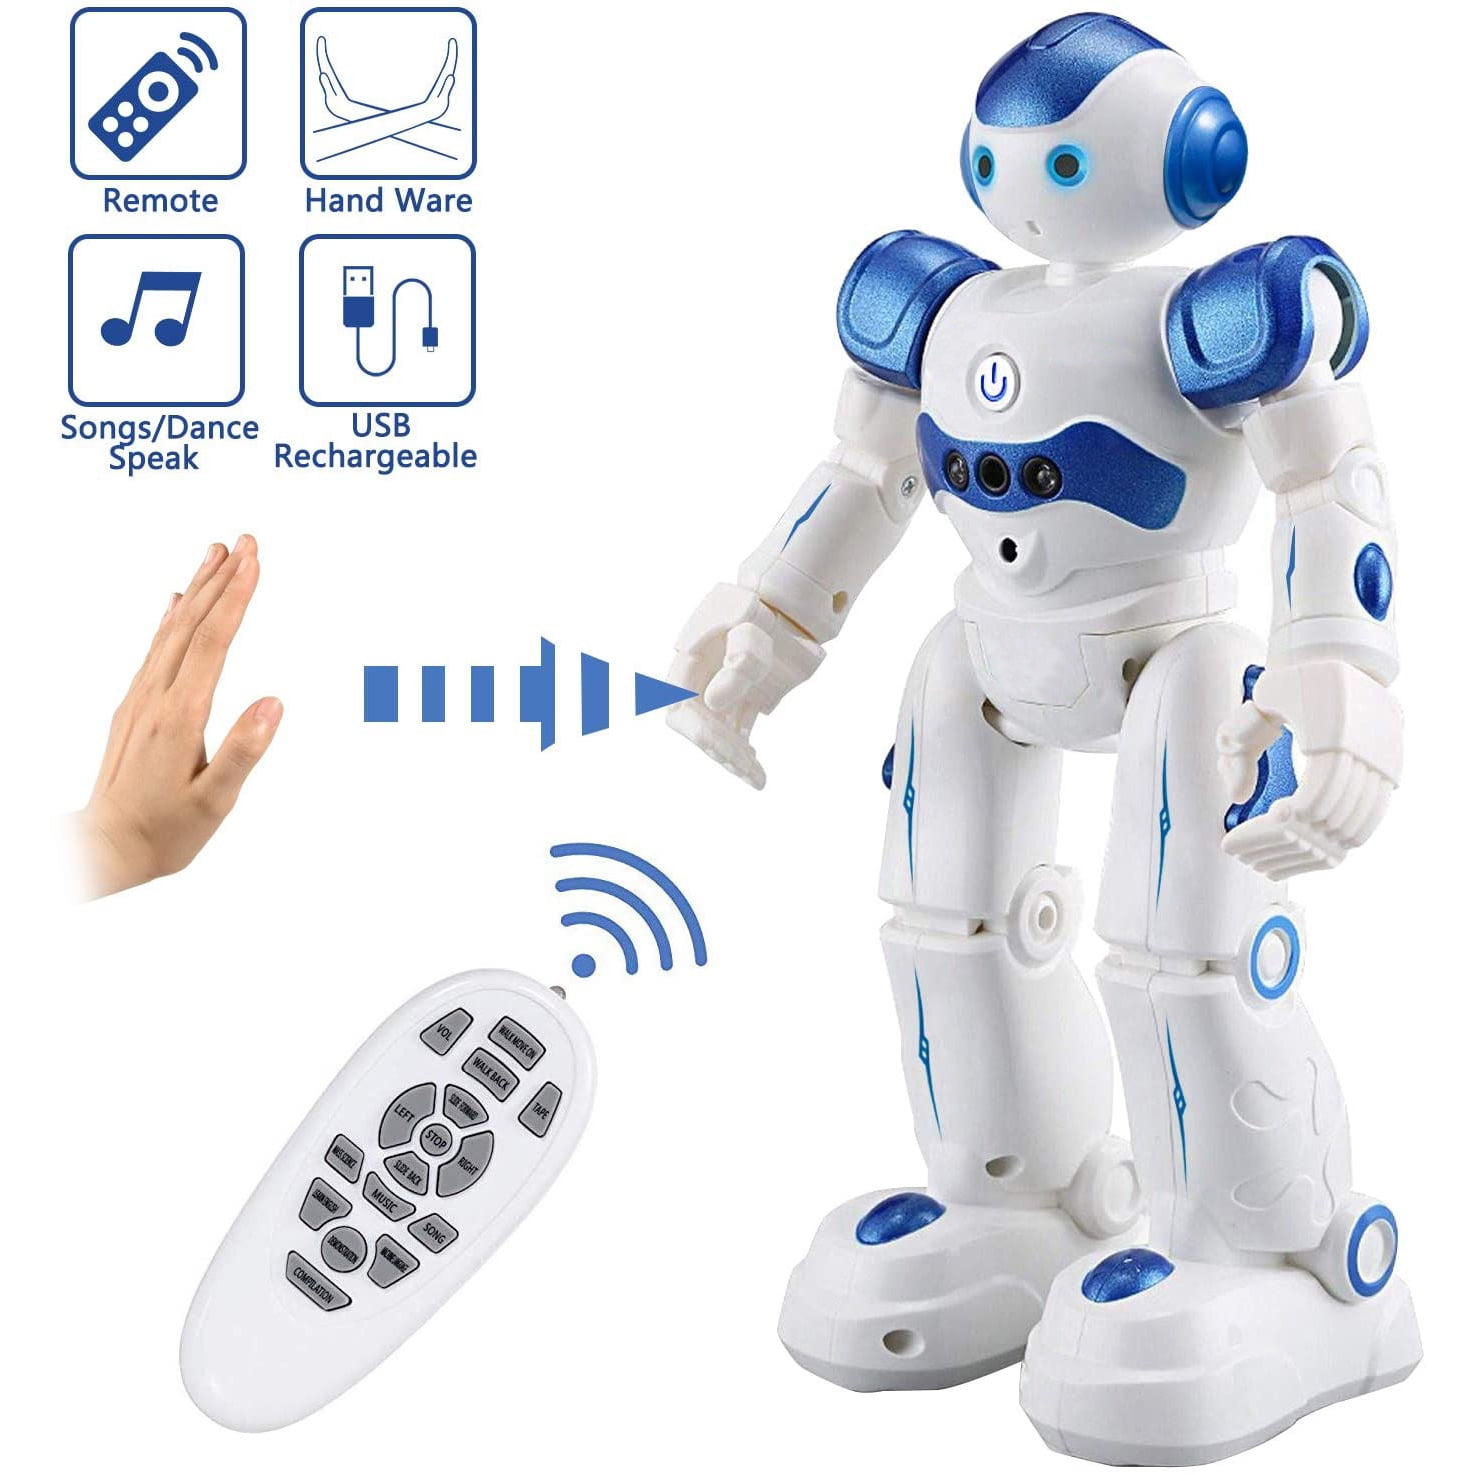 Robot Toy for Kids, Remote Control Intelligent Educational Programmable, Dancing Gesture Sensor Gift - Walmart.com